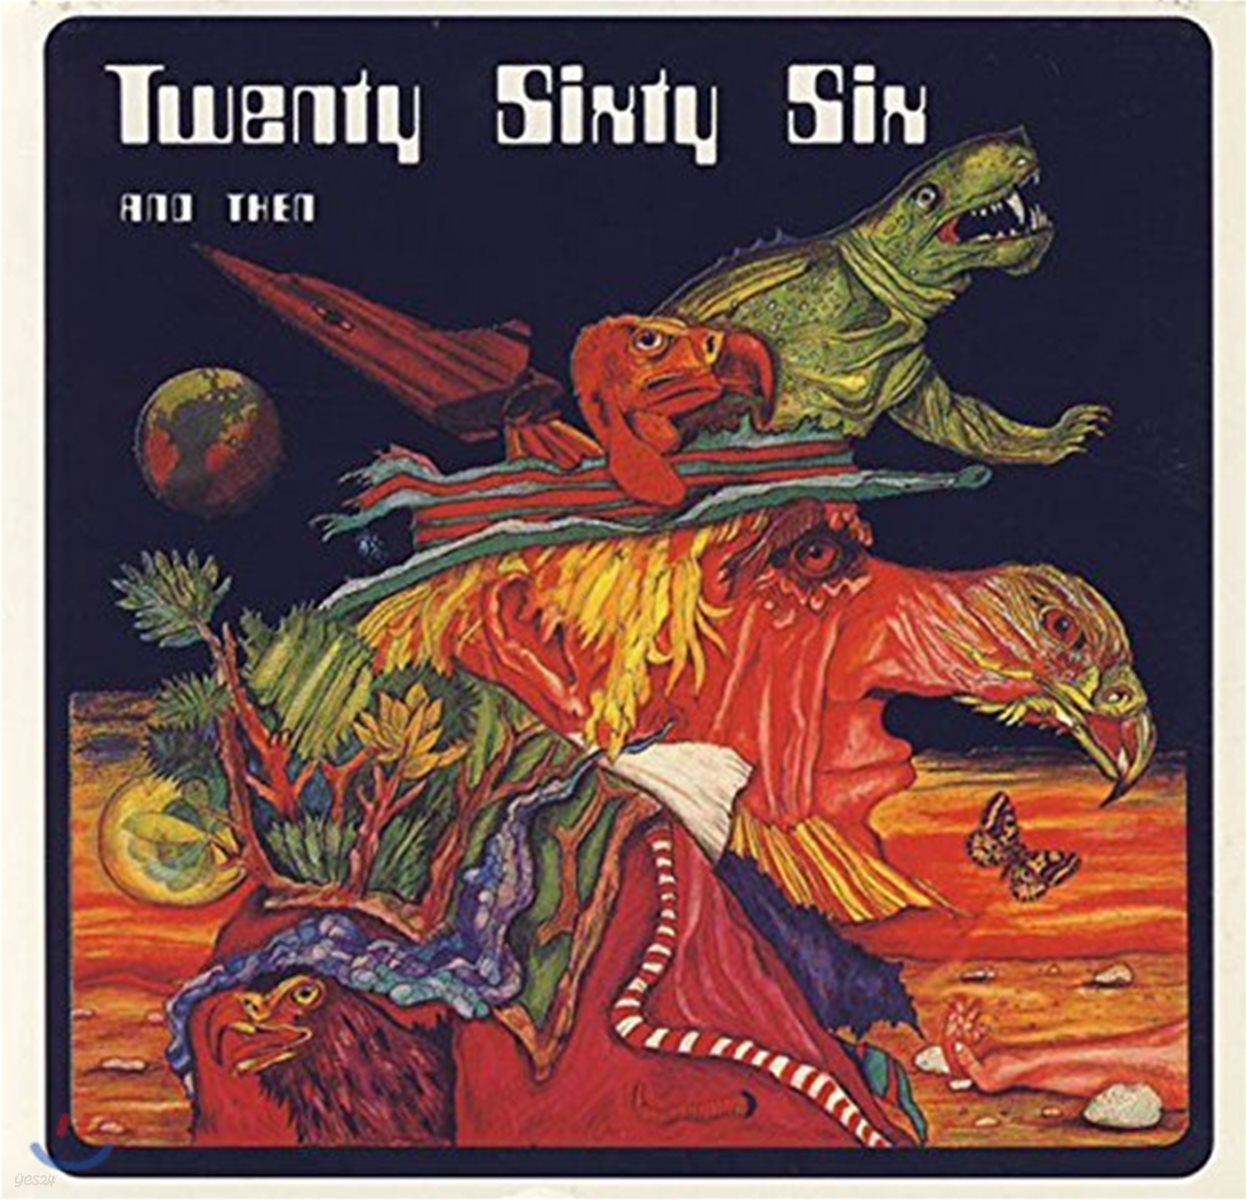 Twenty Sixty Six And Then (트웬티 식스티 식스 앤 덴) - Reflections On The Future [2 LP]